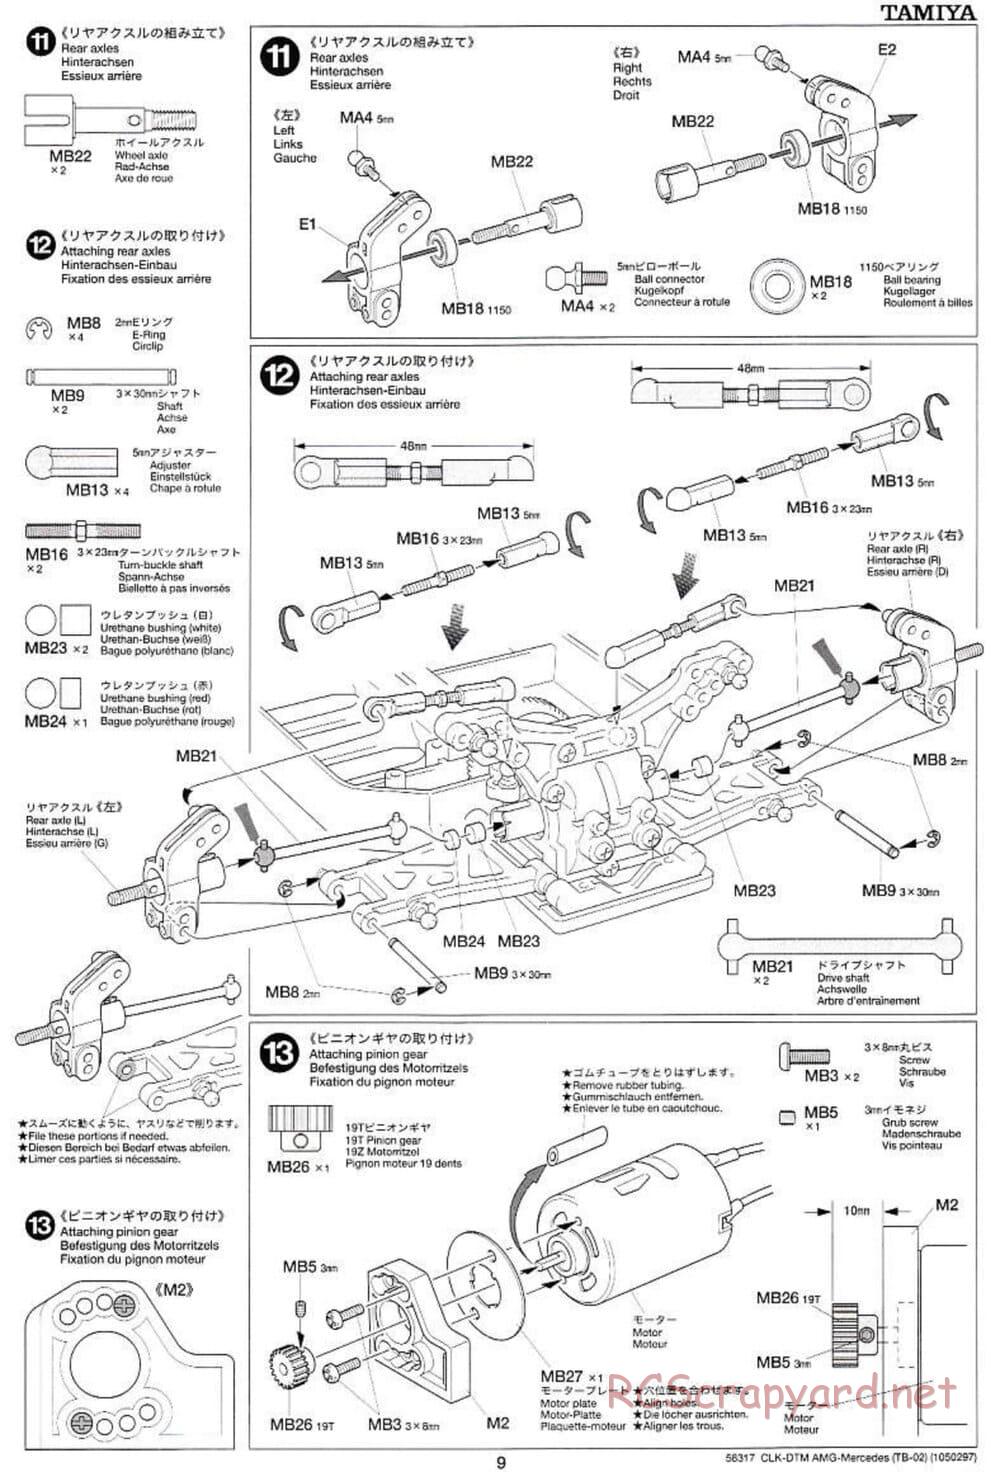 Tamiya - CLK DTM 2002 AMG Mercedes - TB-02 Chassis - Manual - Page 9